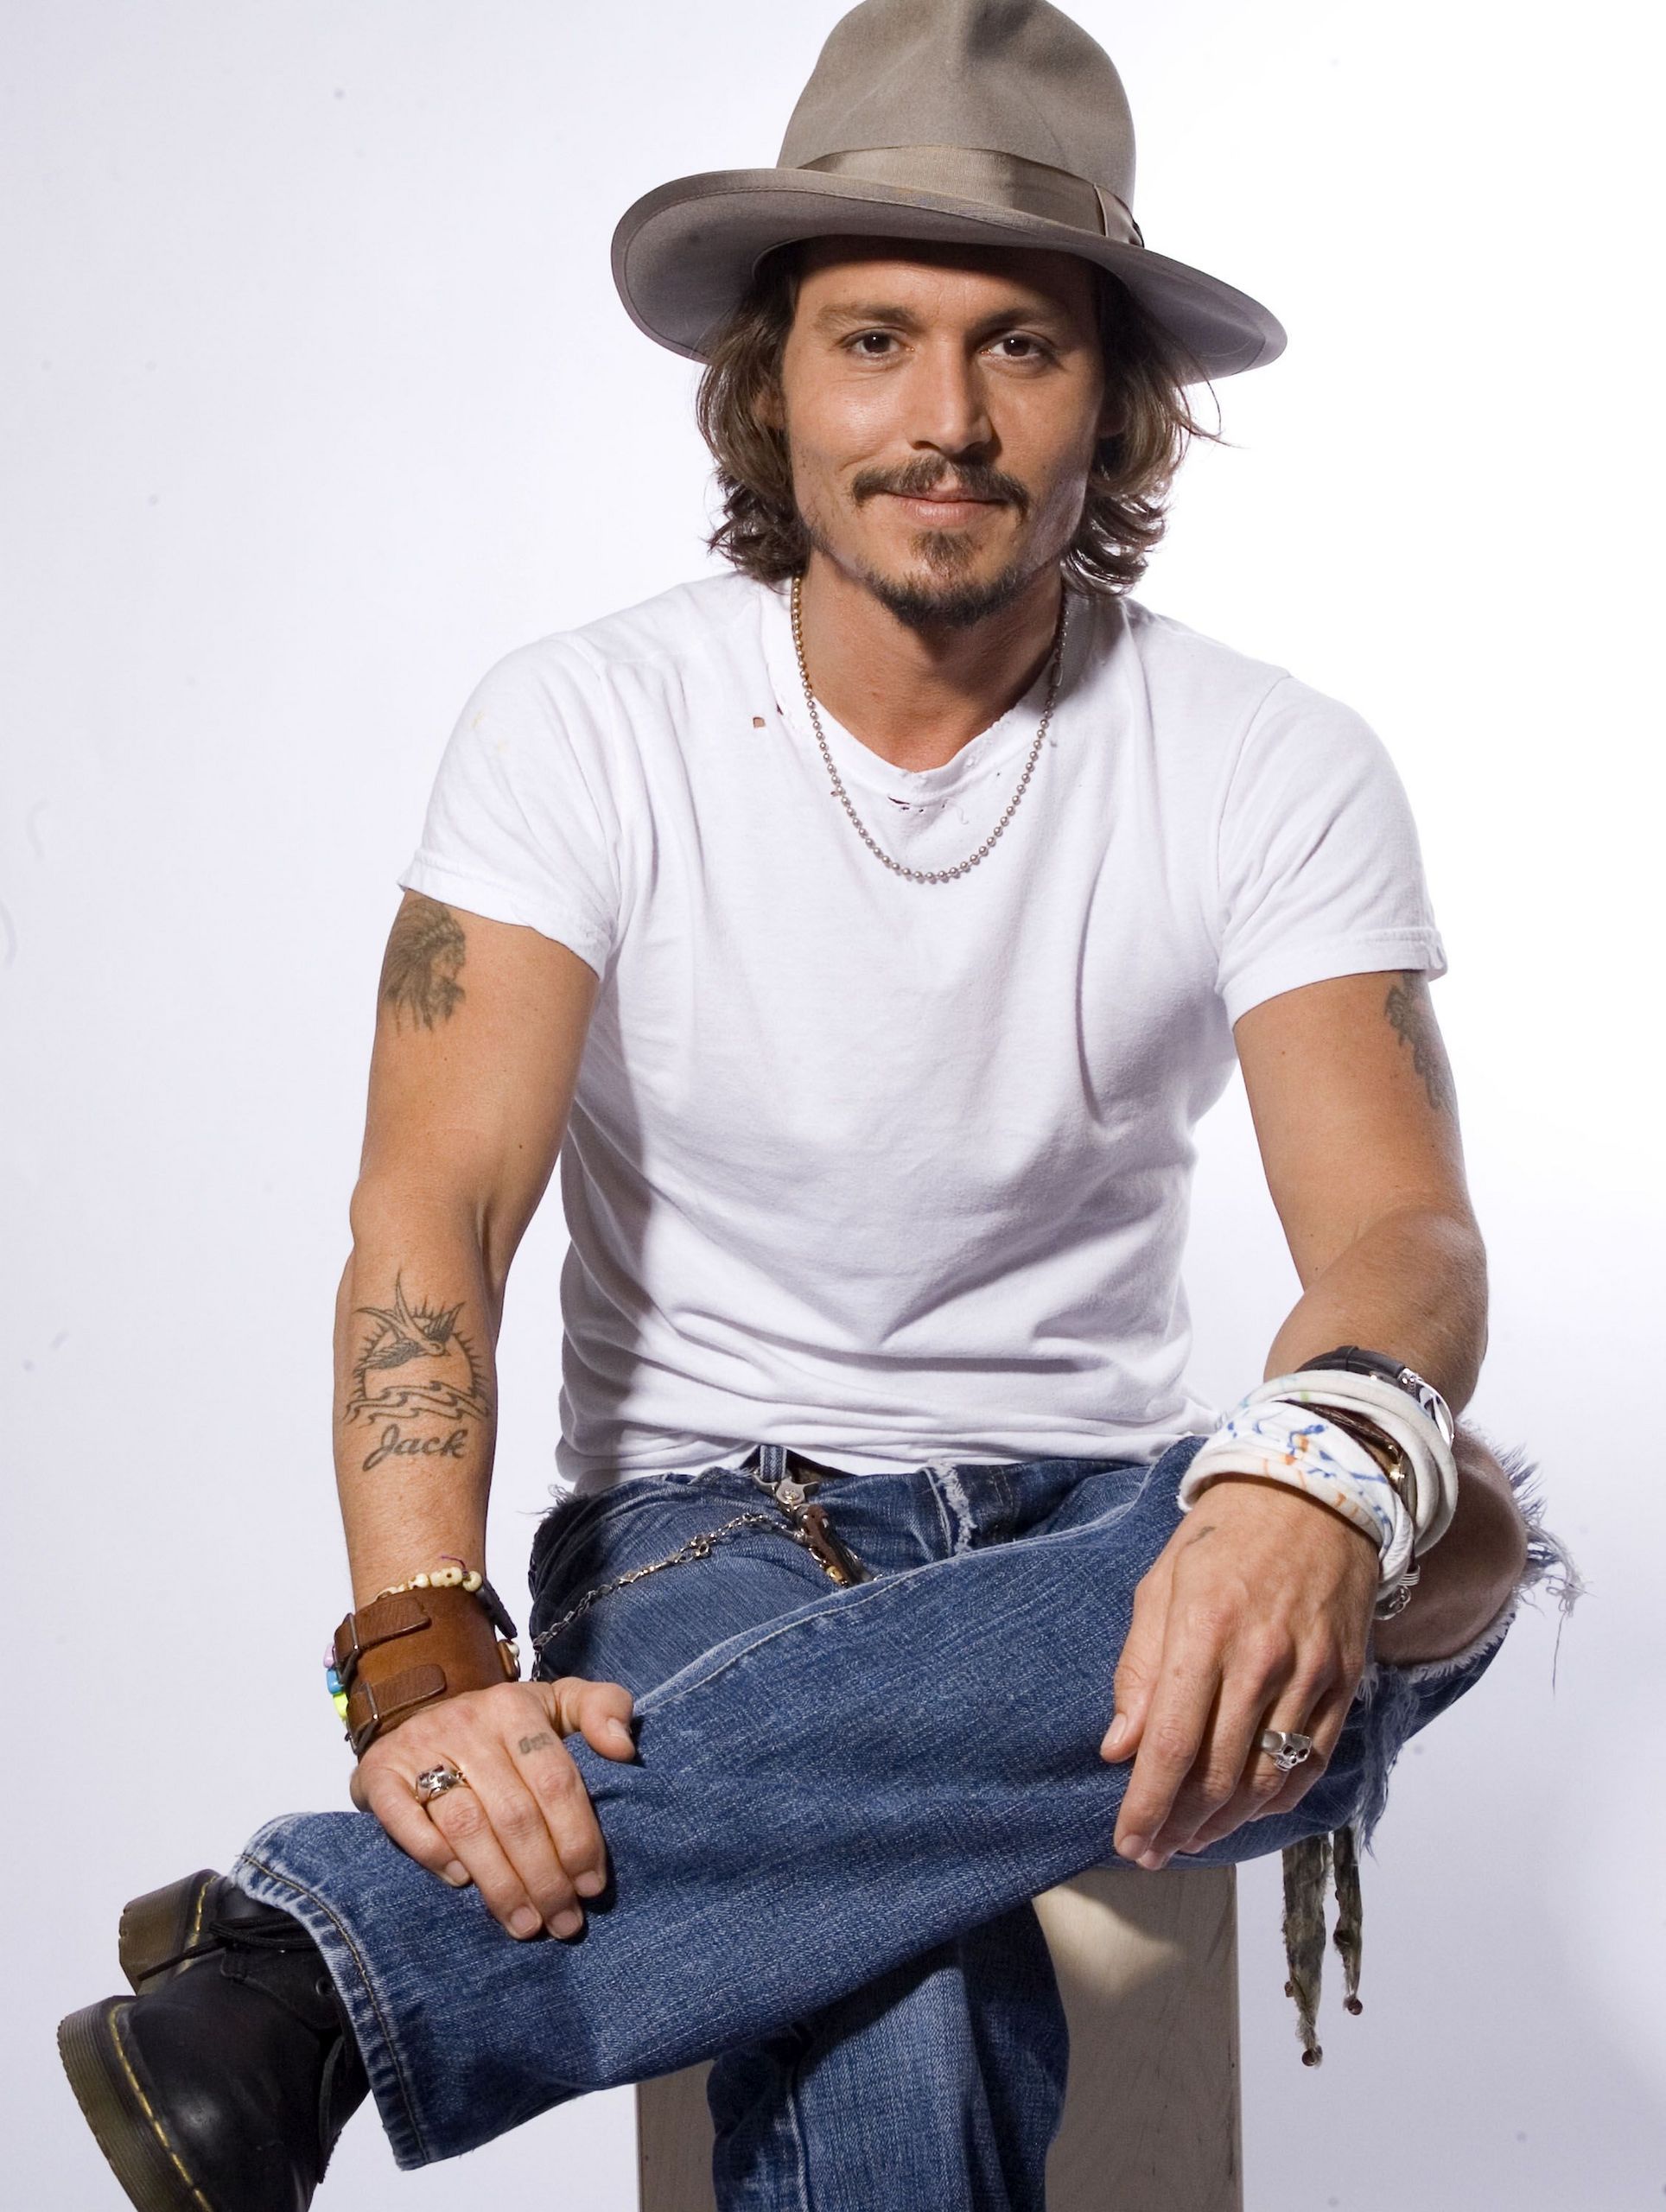 Photoshoot 2006 - Johnny Depp Photo (5811011) - Fanpop